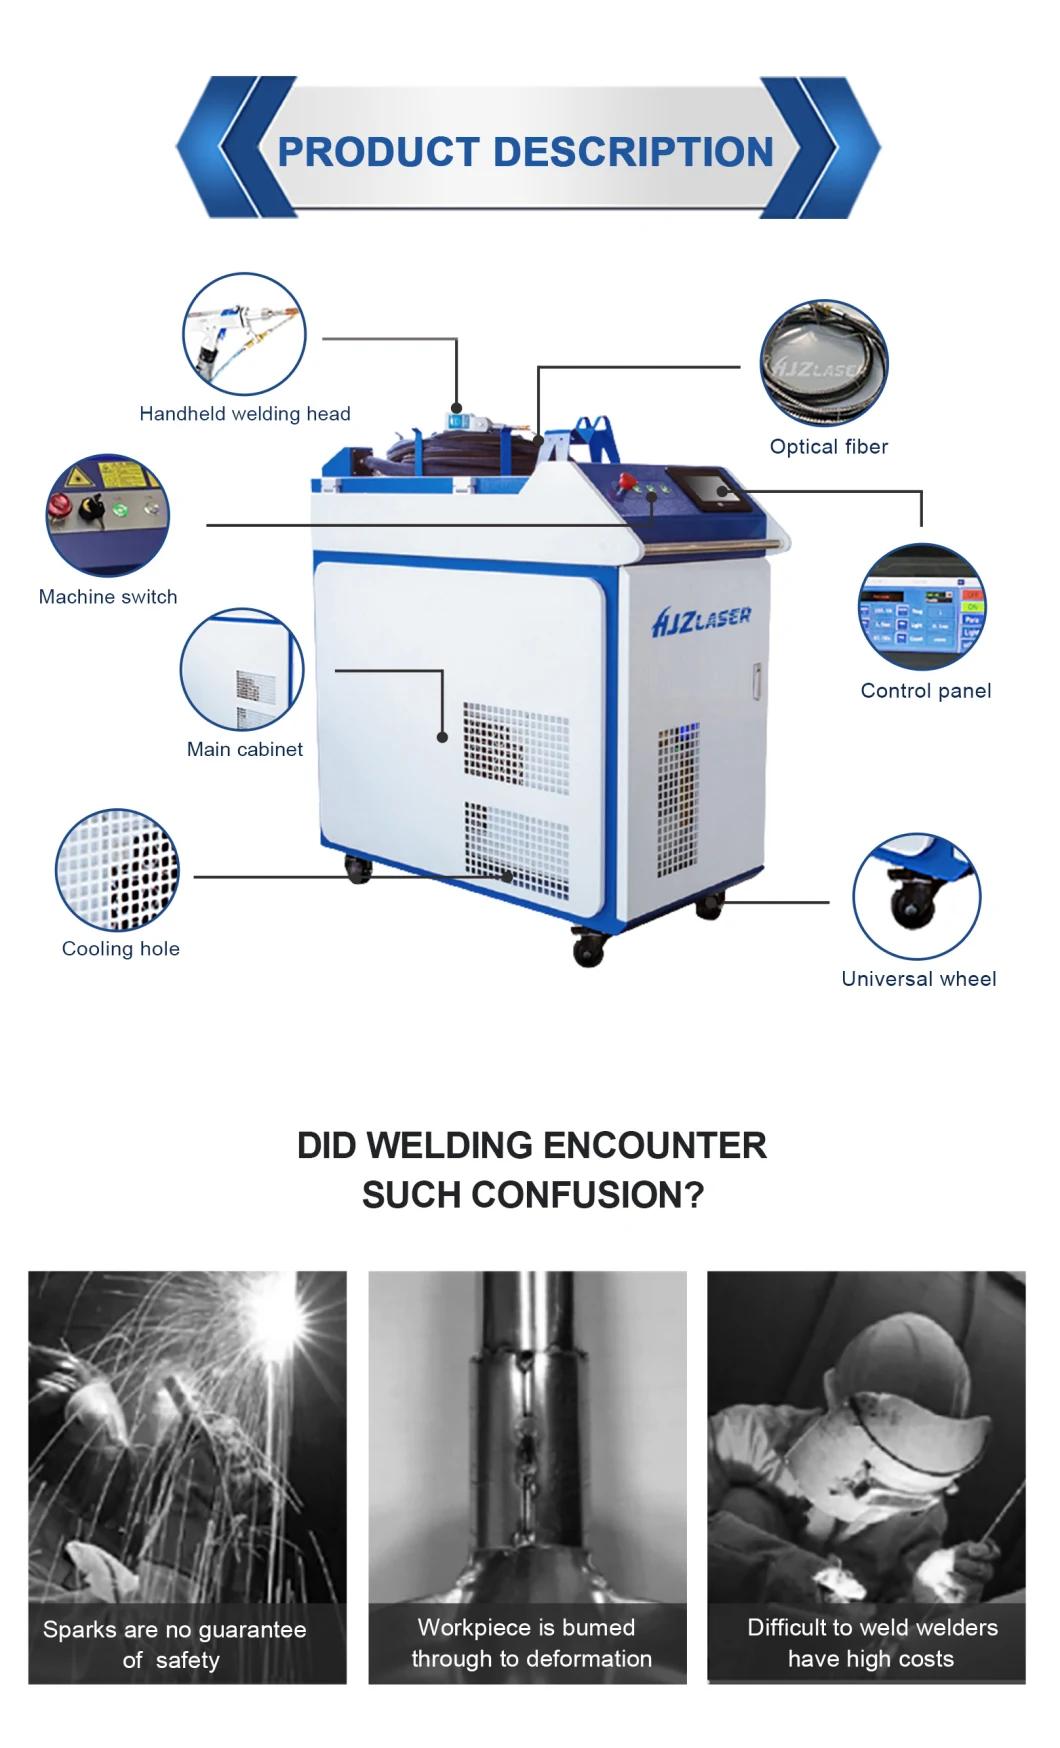 1000W 1500W Handheld Laser Welding Machine for Welding Stainless Steel Aluminum